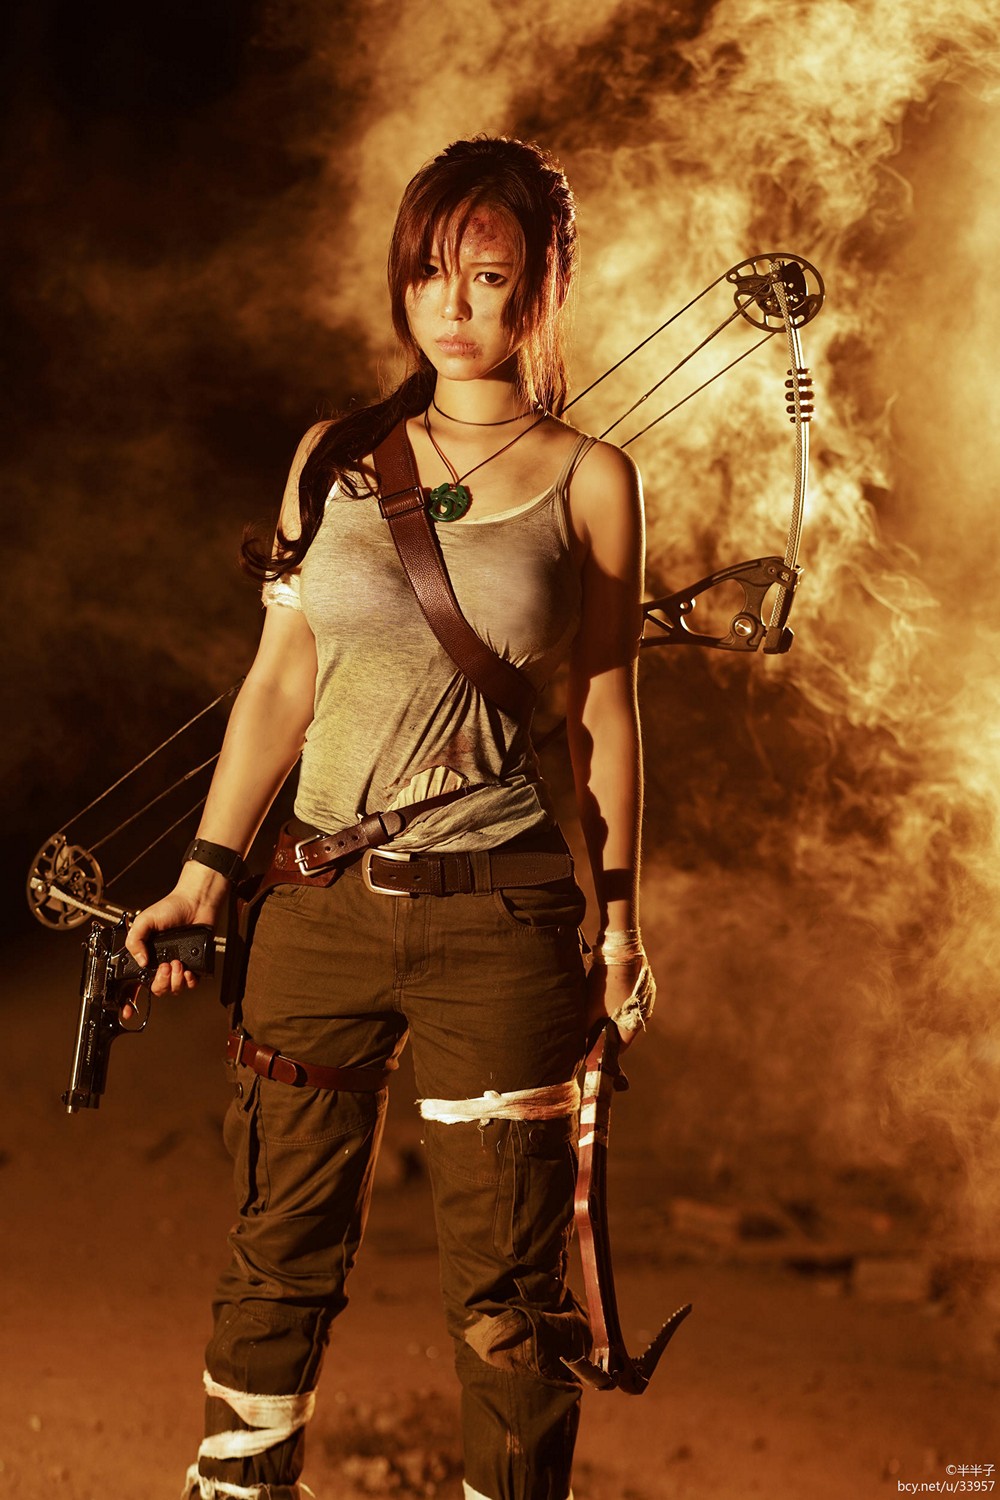 (Cosplay) BANBANKO - Lara Croft (Tomb Raider) - COSPLAY -